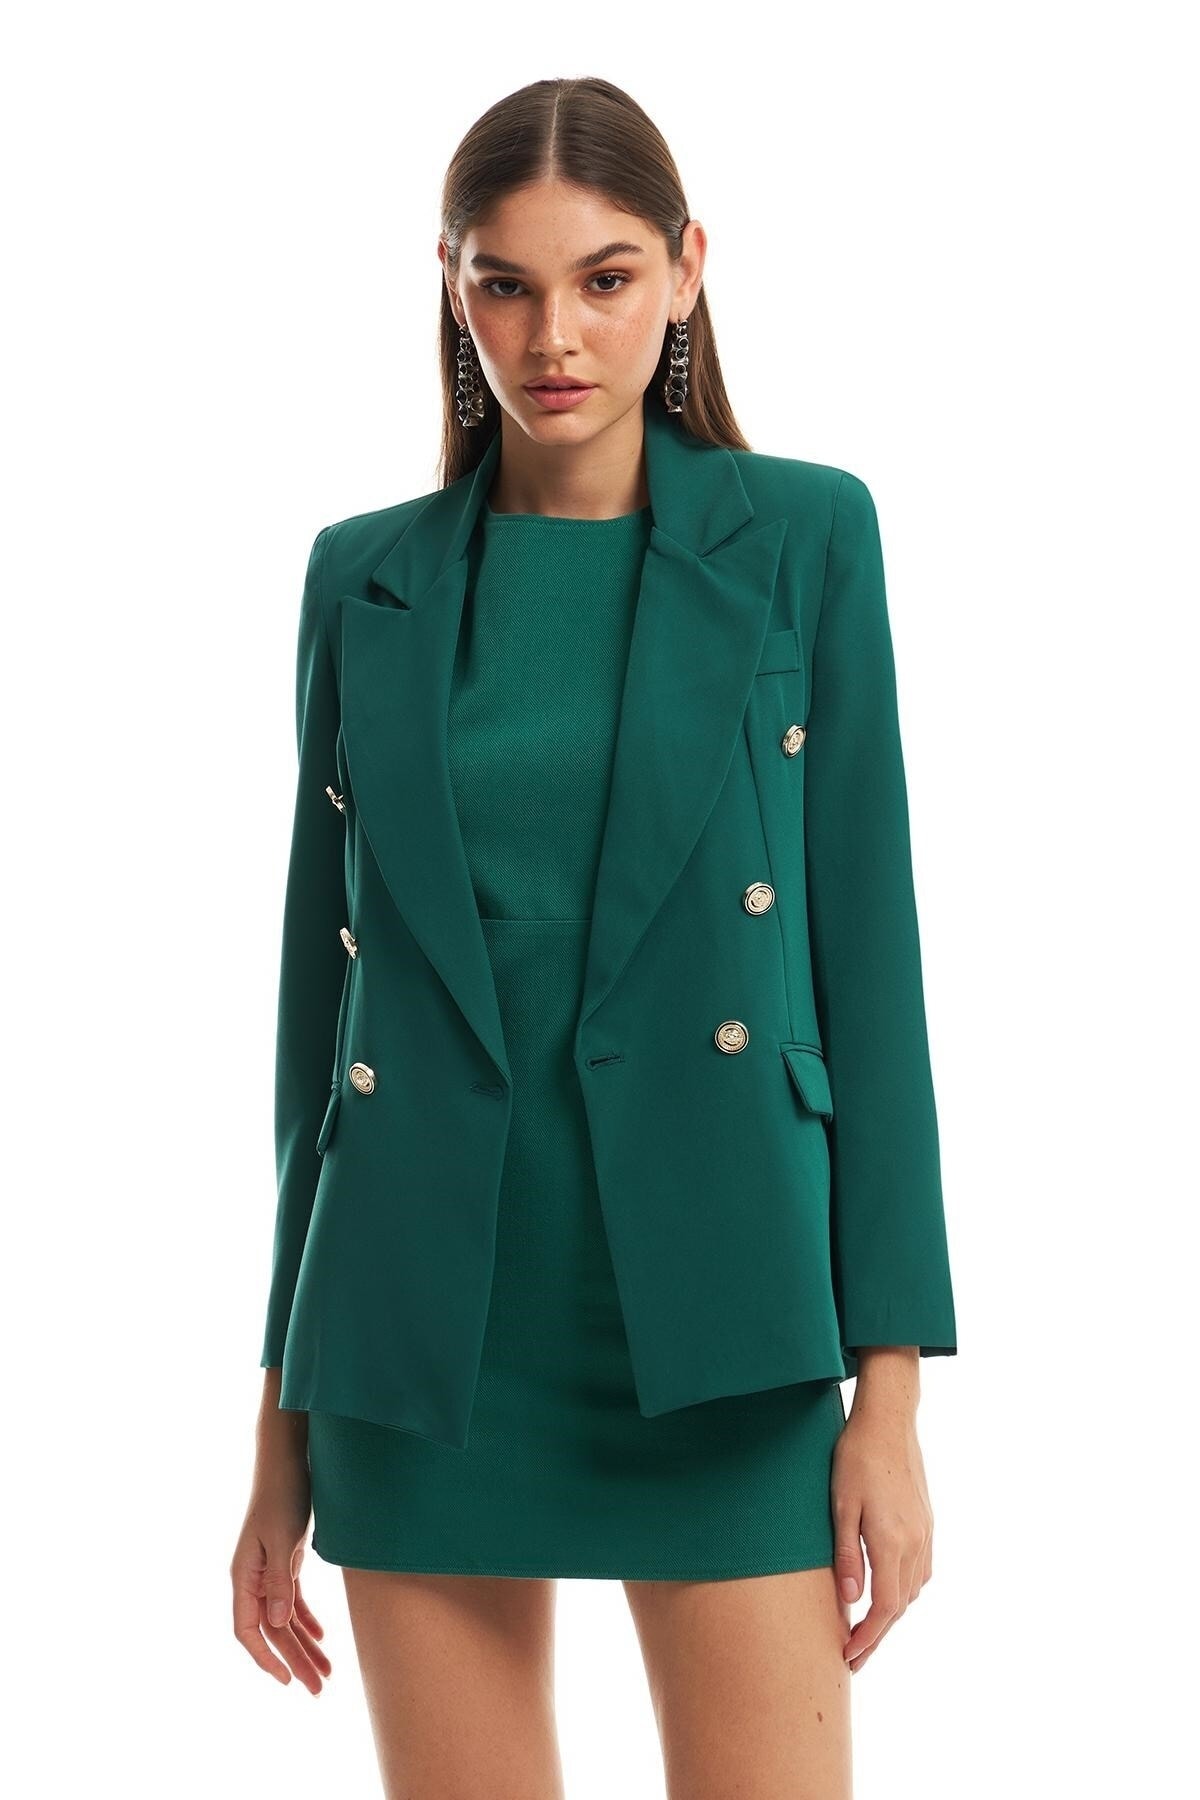 Quzu Düğme Detaylı Blazer Ceket Koyu Yeşil